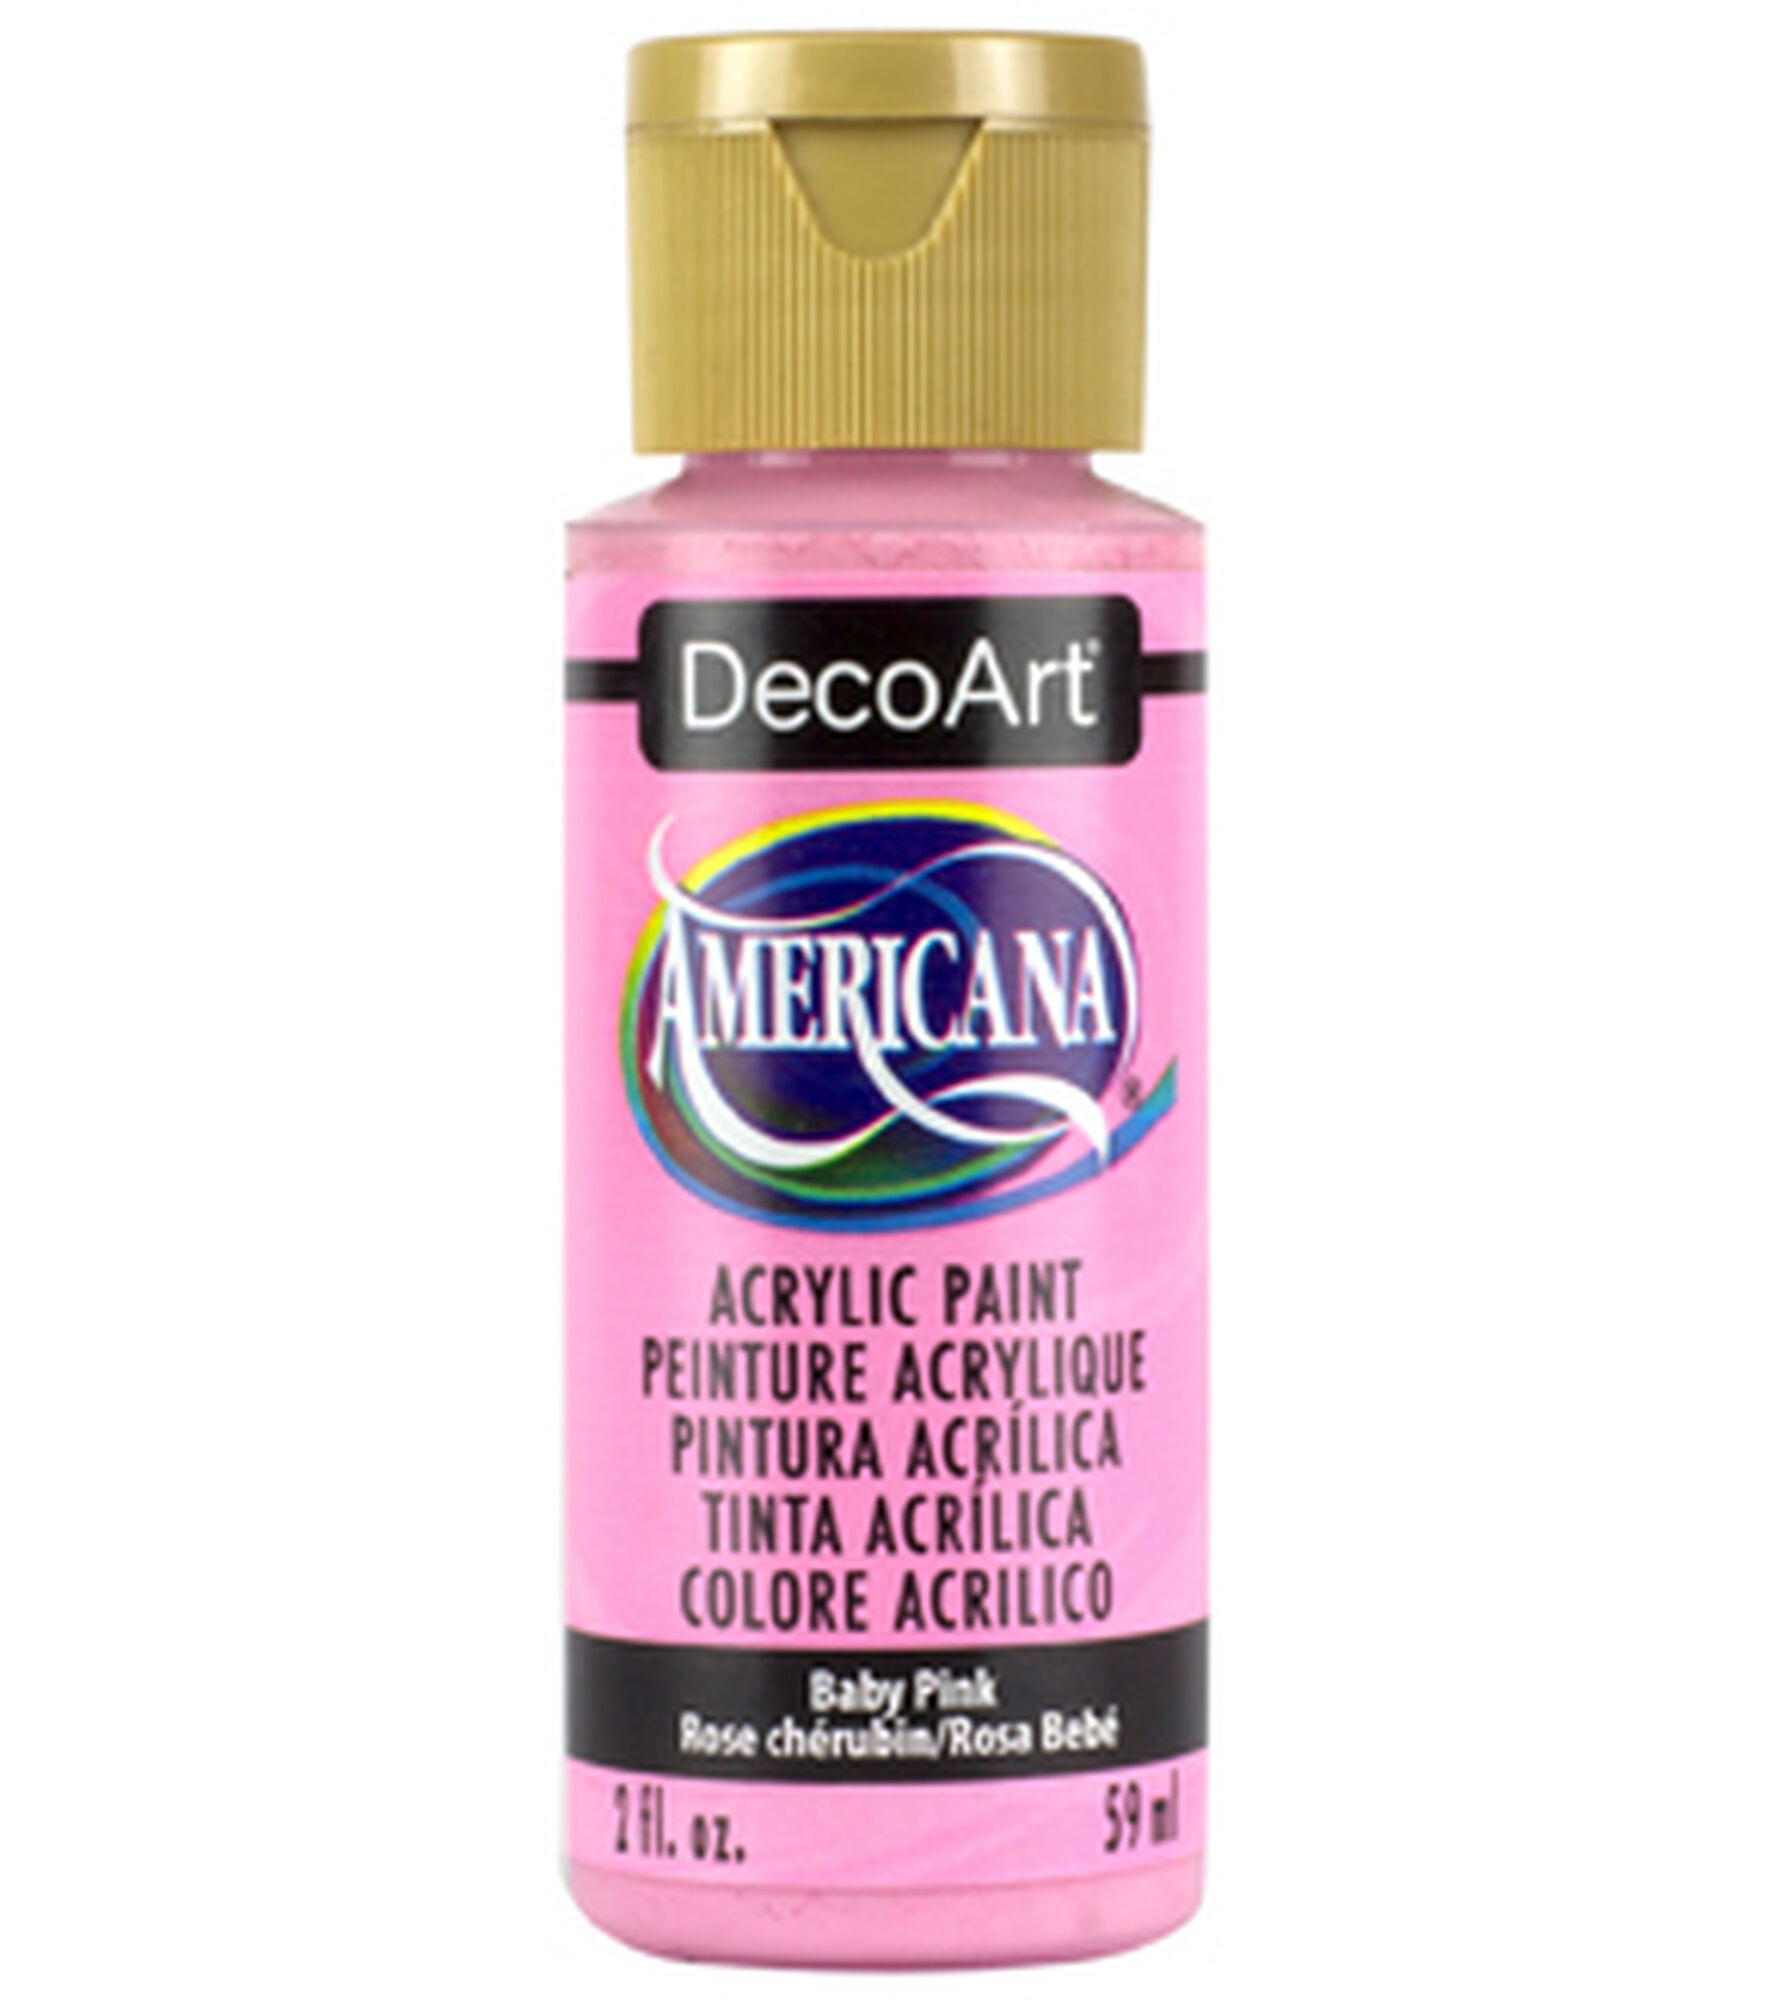 DecoArt Americana Acrylic 2oz Paint, Baby Pink, hi-res